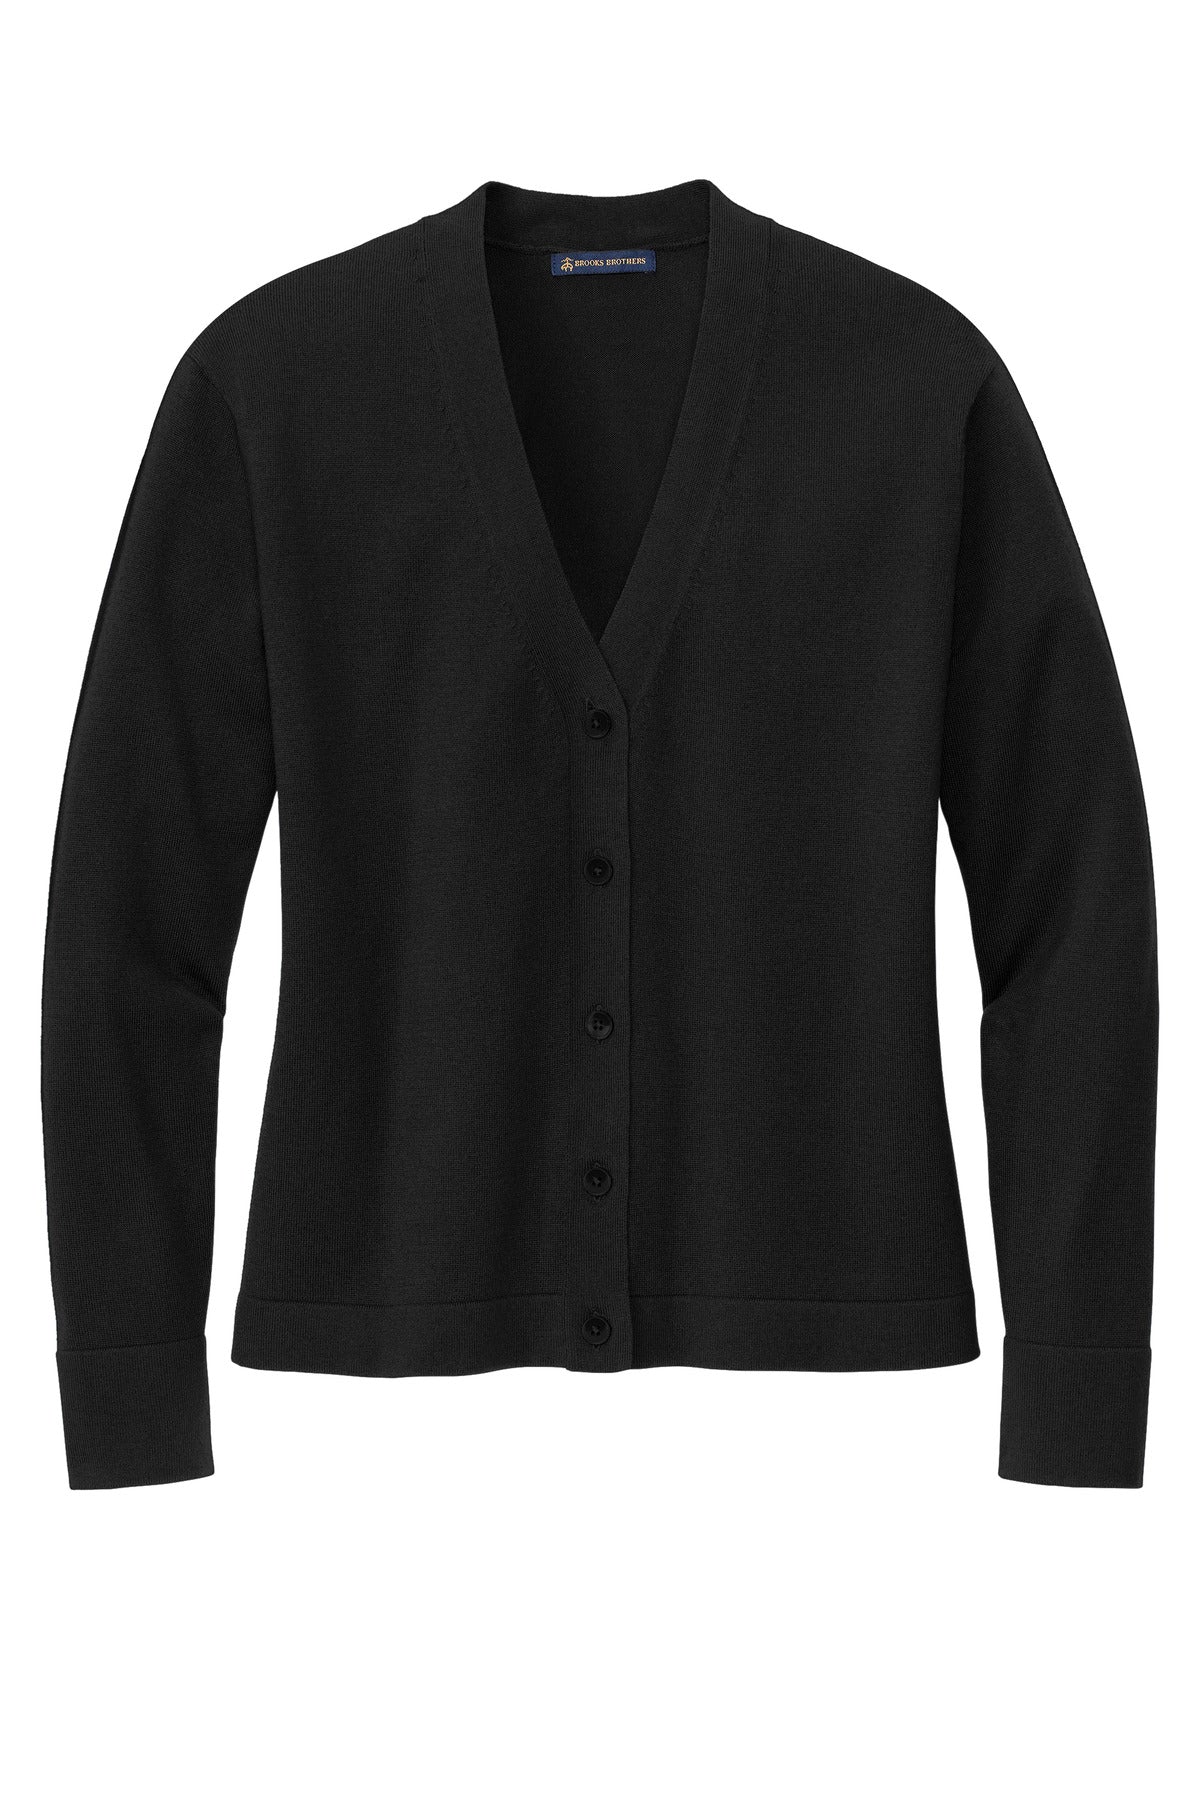 Brooks Brothers® Women's Cotton Stretch Cardigan Sweater BB18405